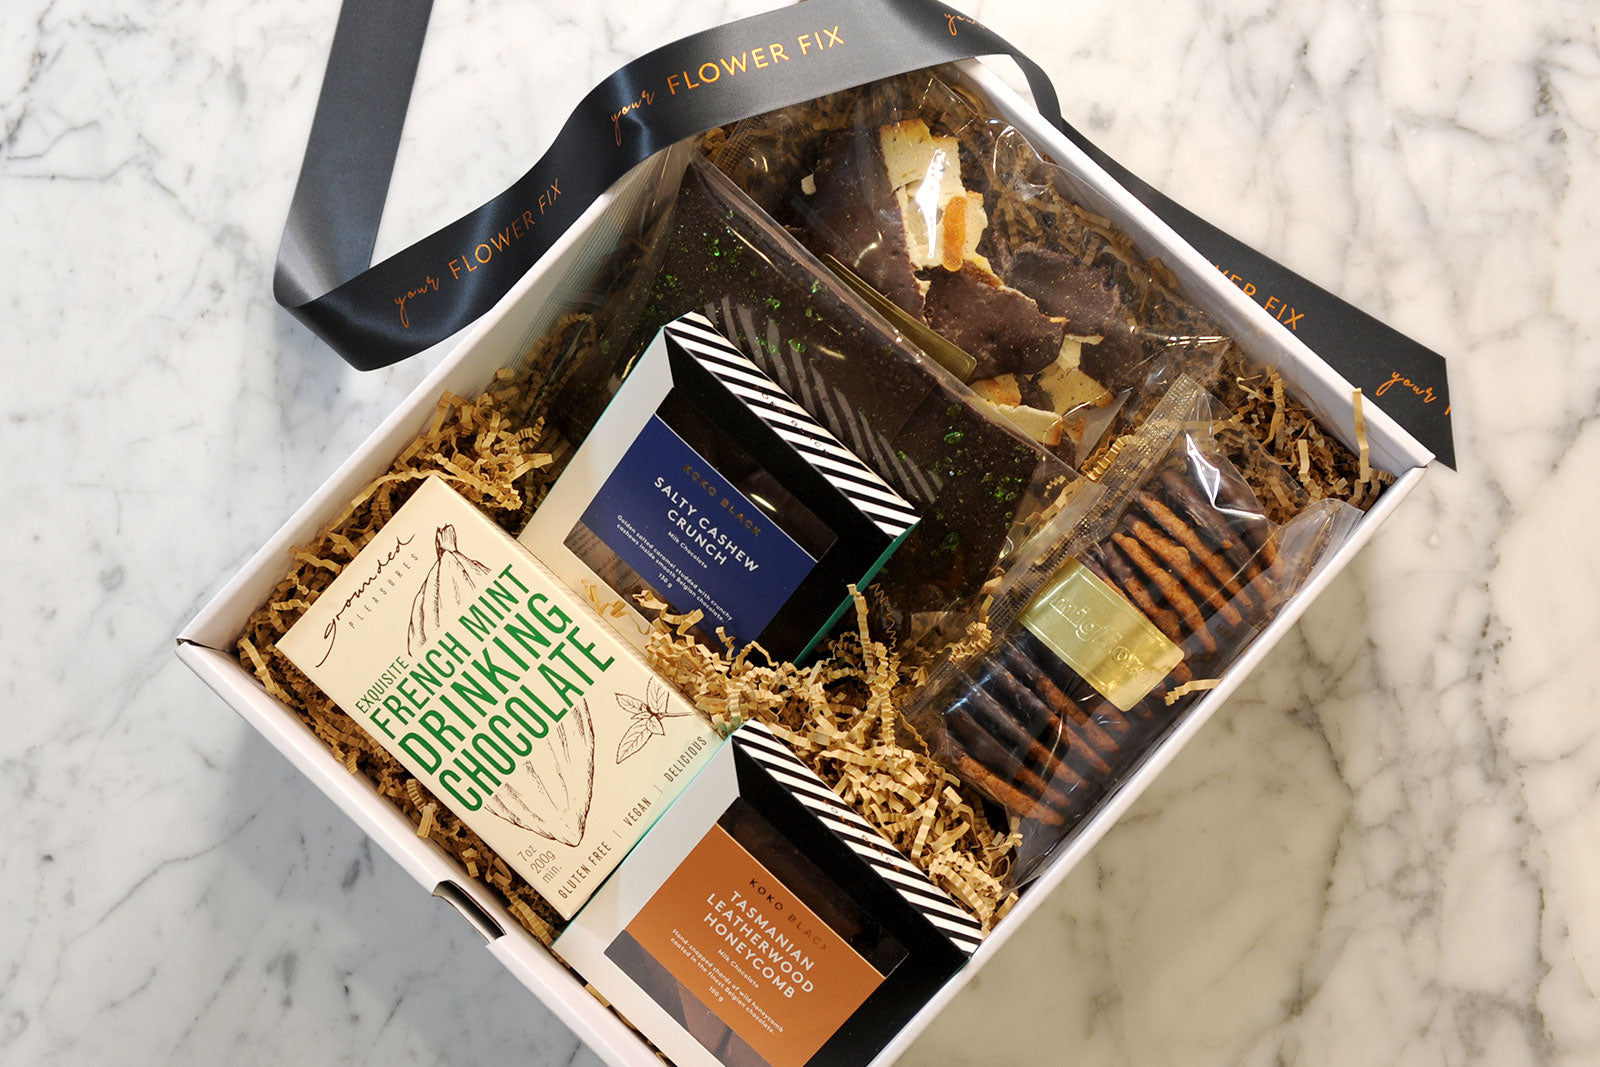 Chocolate Delight Gift Box